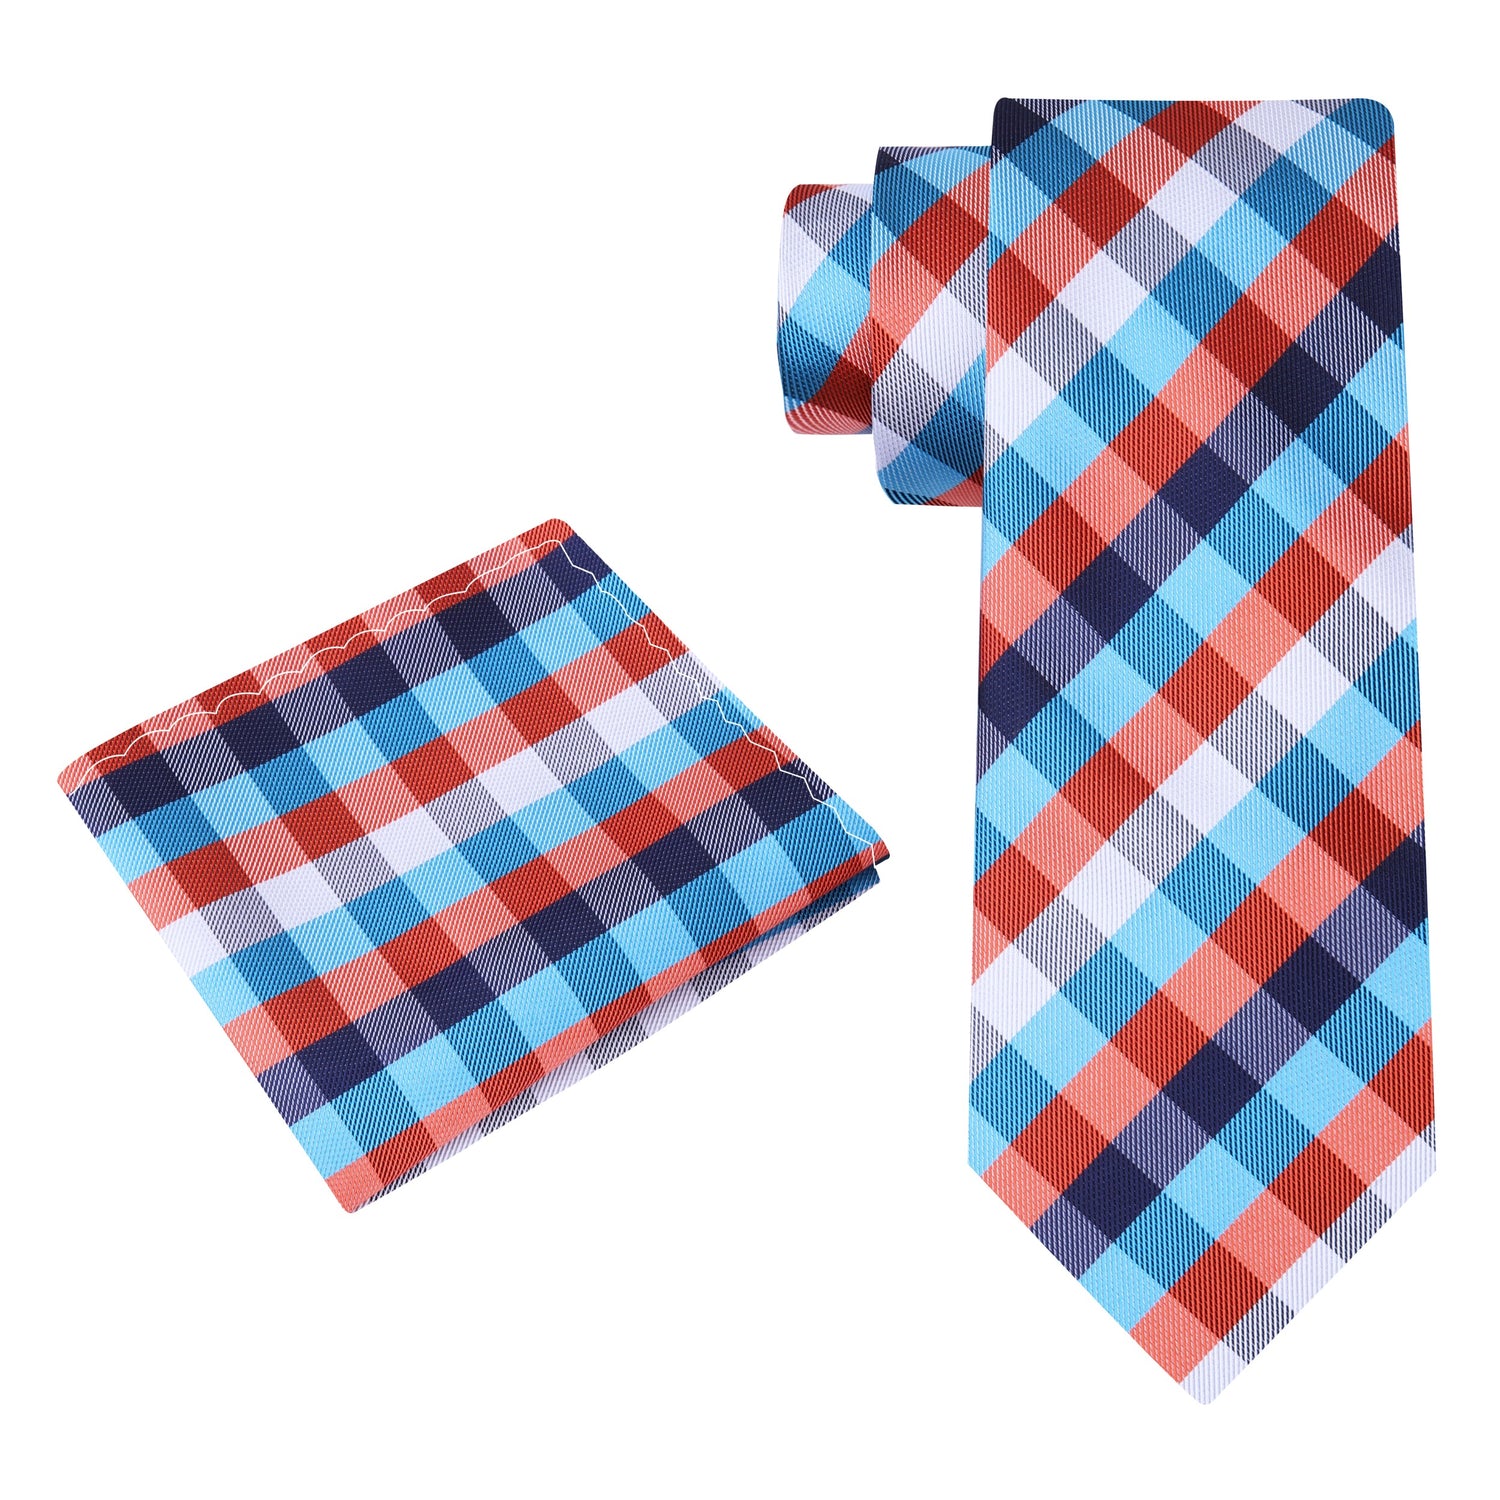 Alt View: Light Blue, Orange Check Tie and Pocket Square